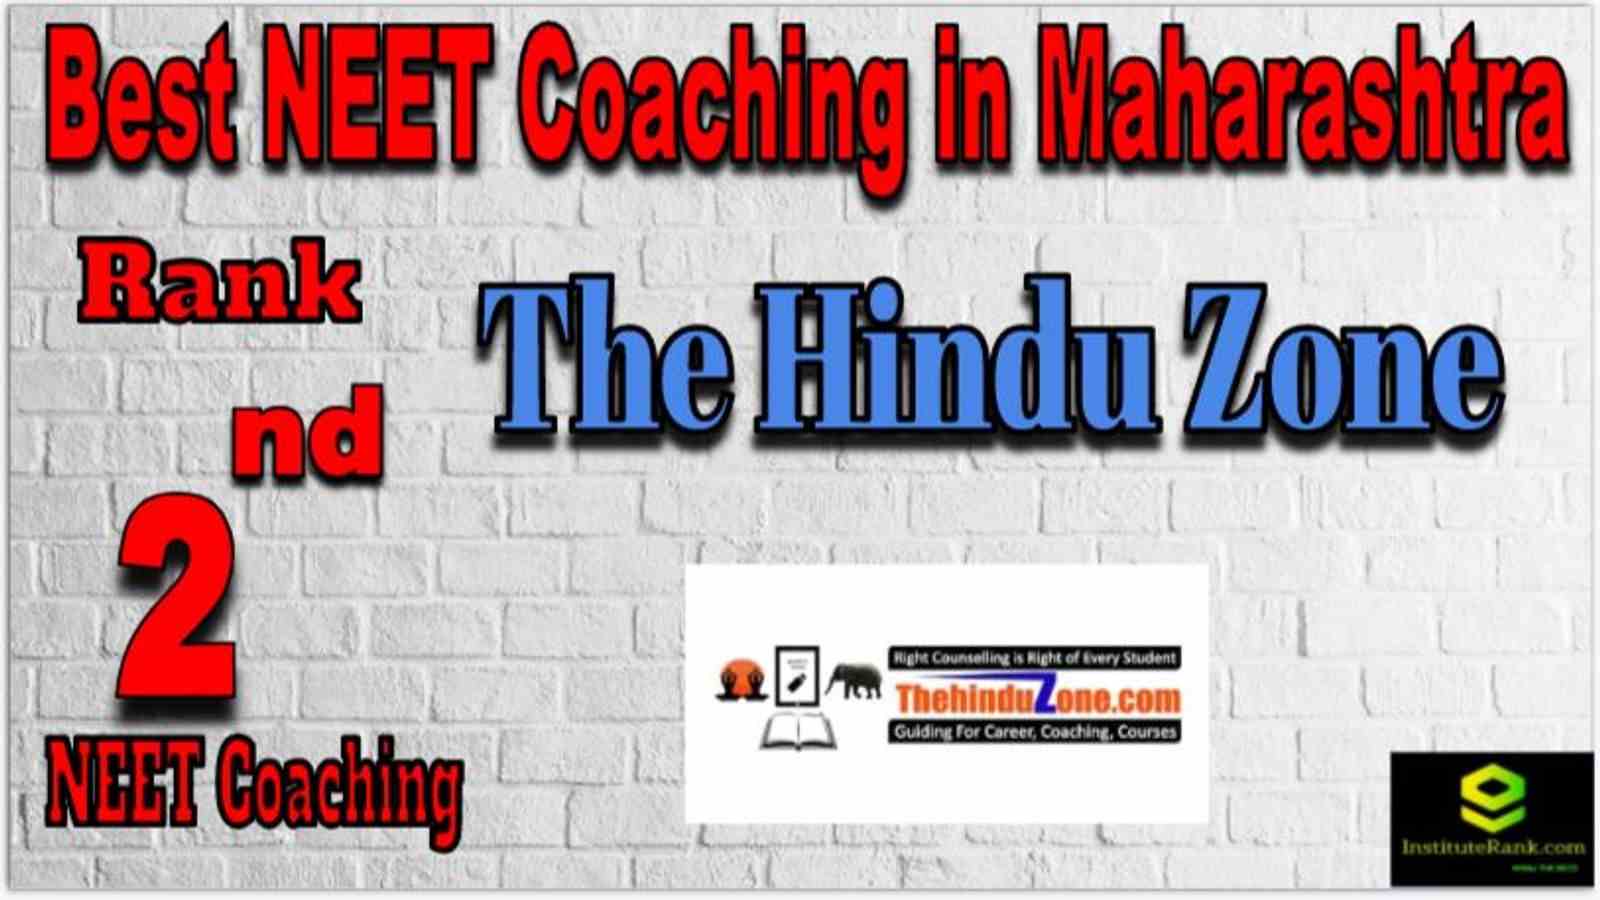 Rank 2 Best NEET Coaching in Maharashtra